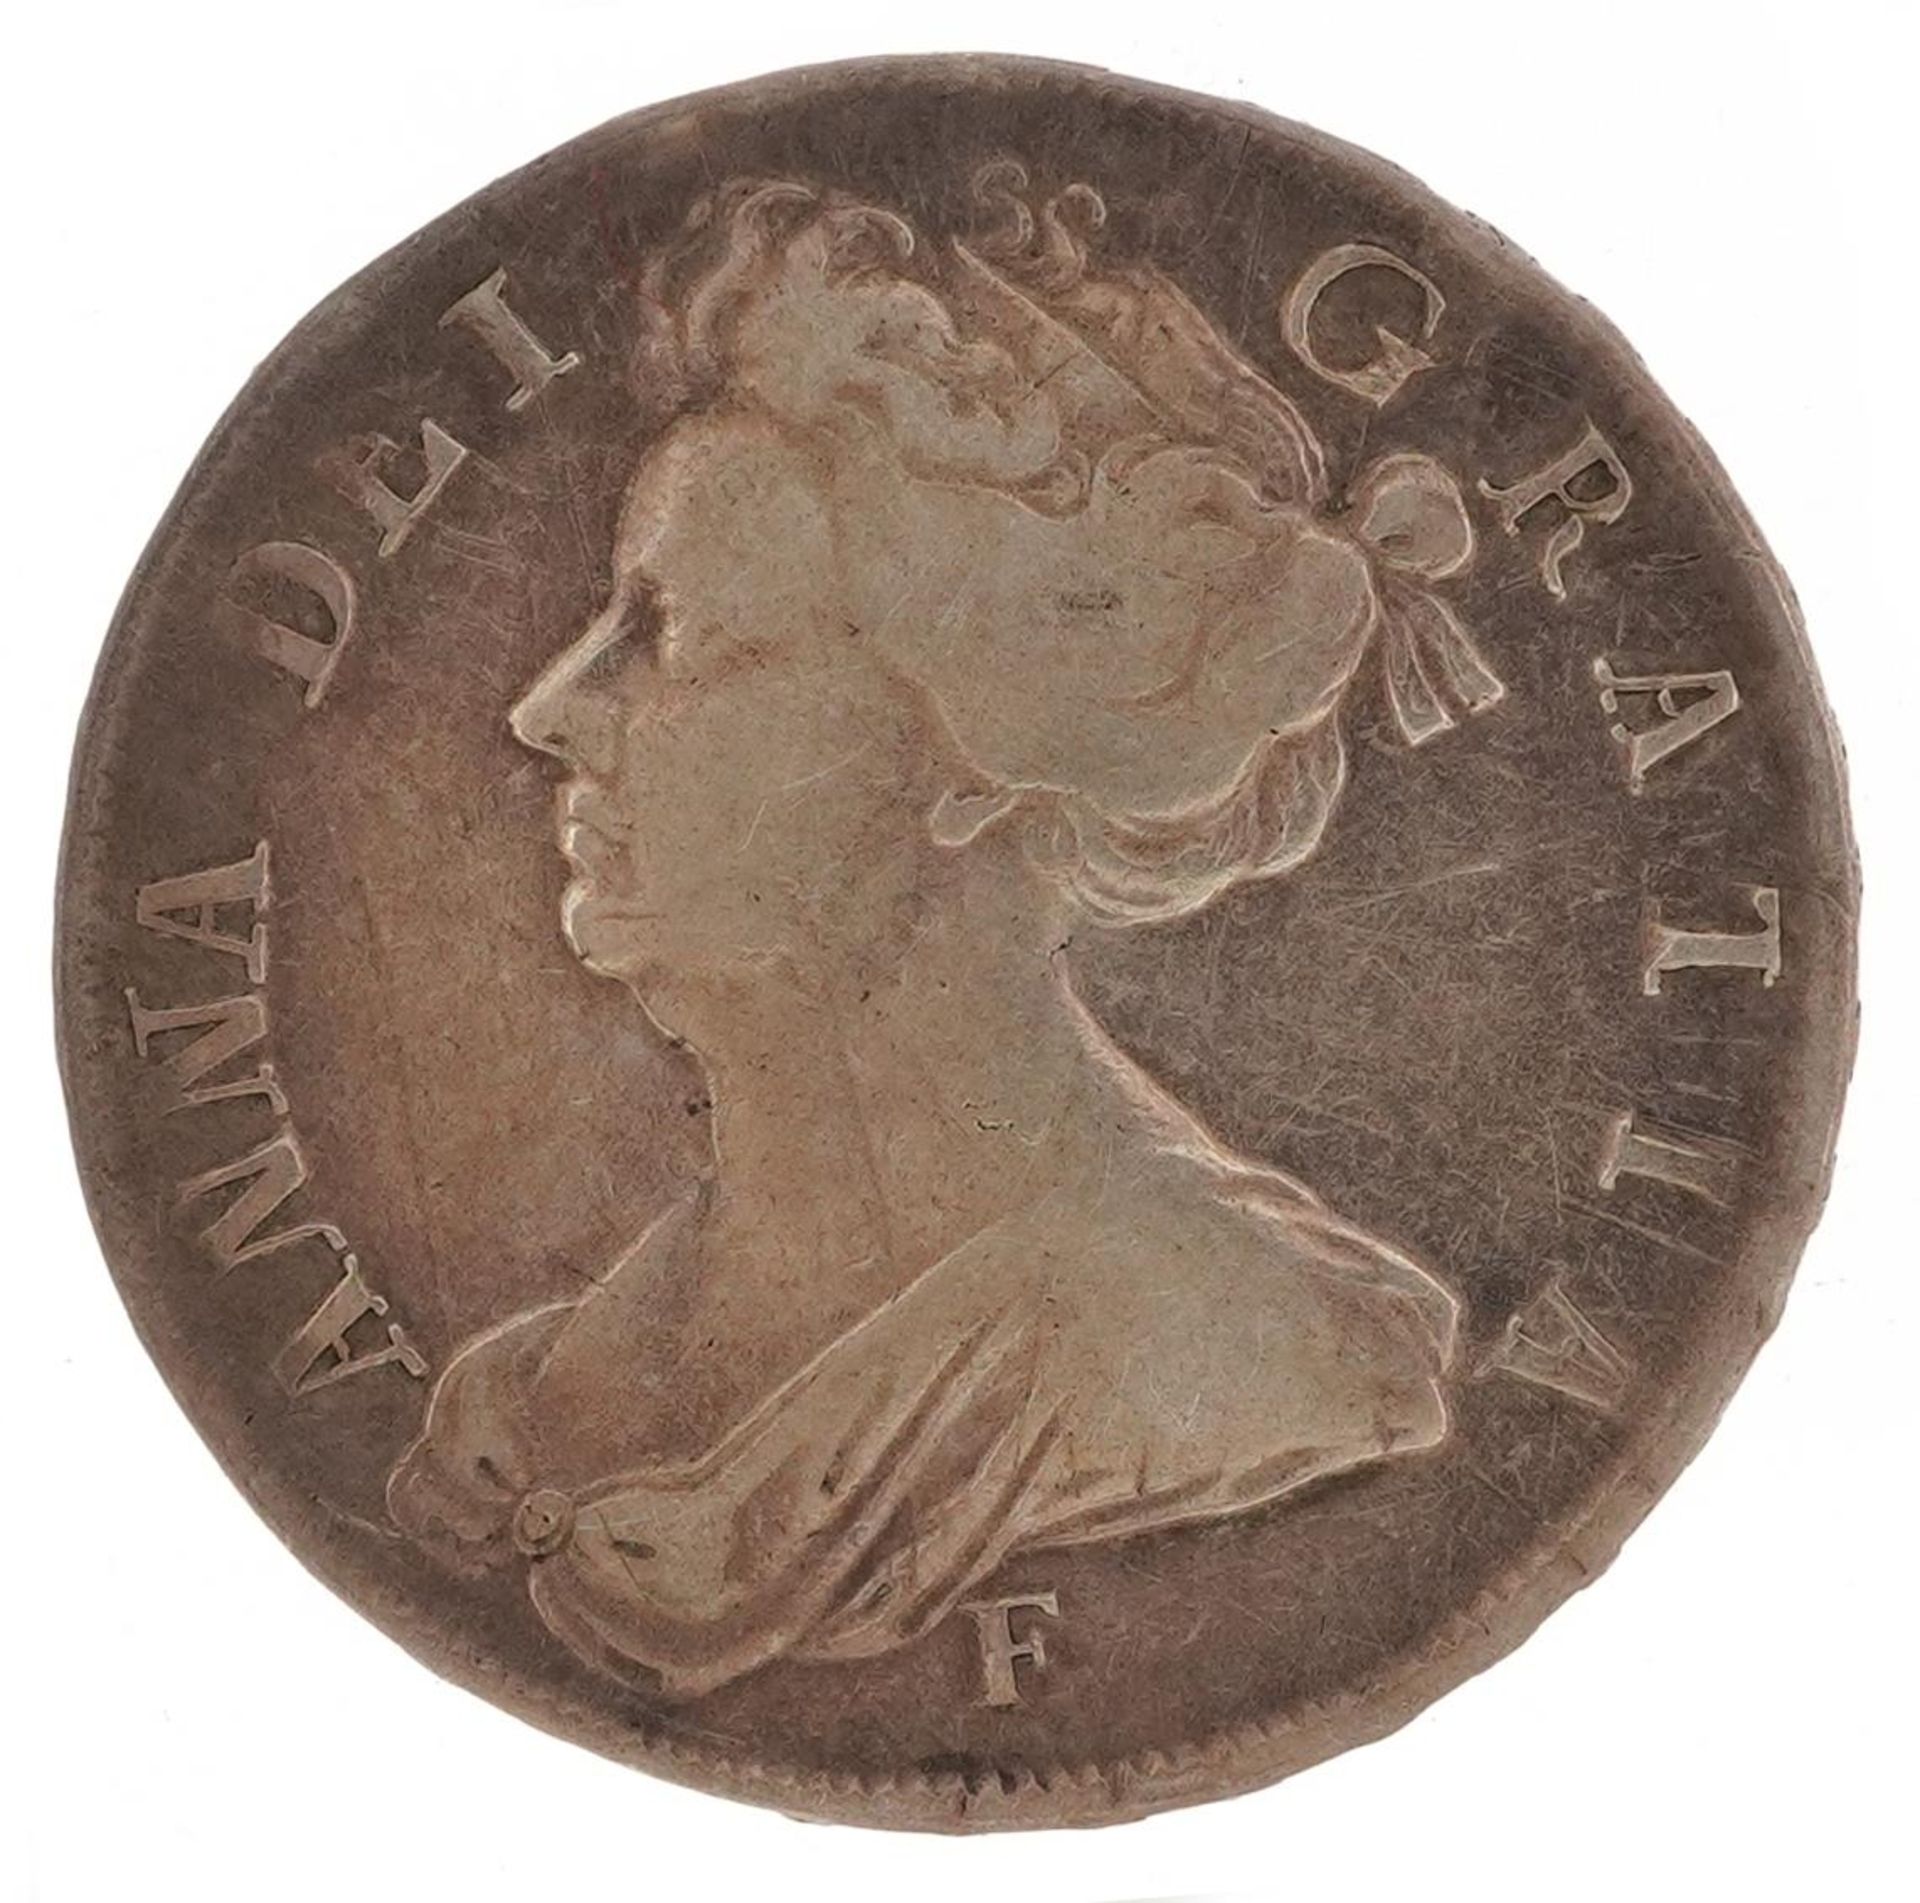 Queen Anne 1707 silver half crown - Image 2 of 3